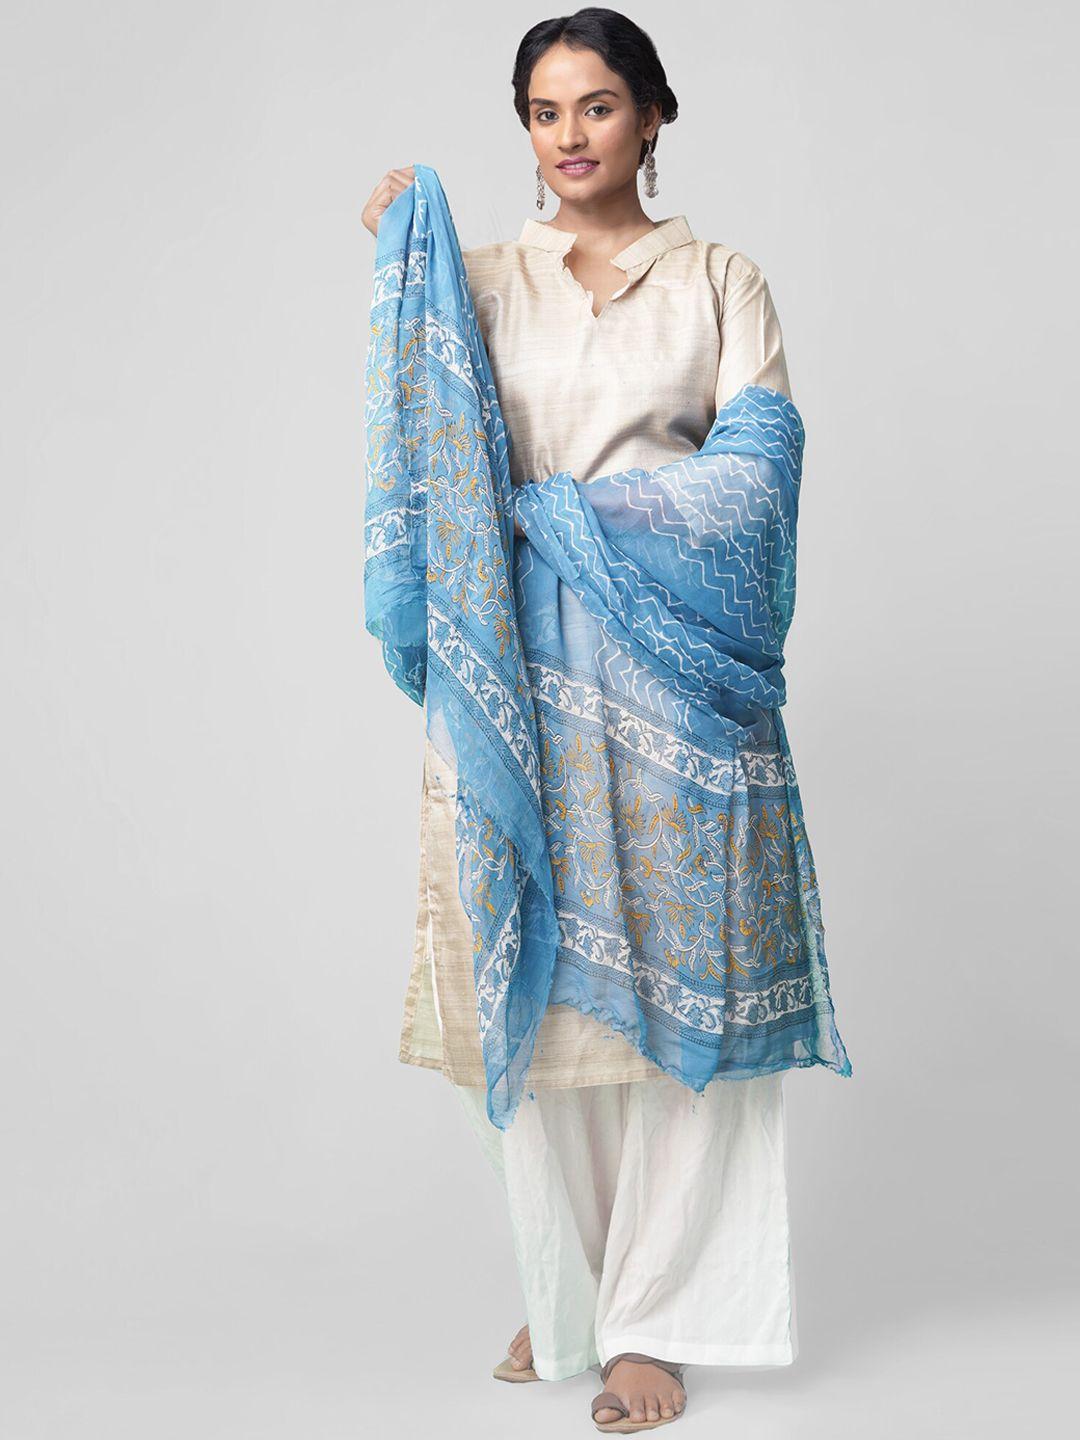 unnati-silks-blue-&-white-printed-dupatta